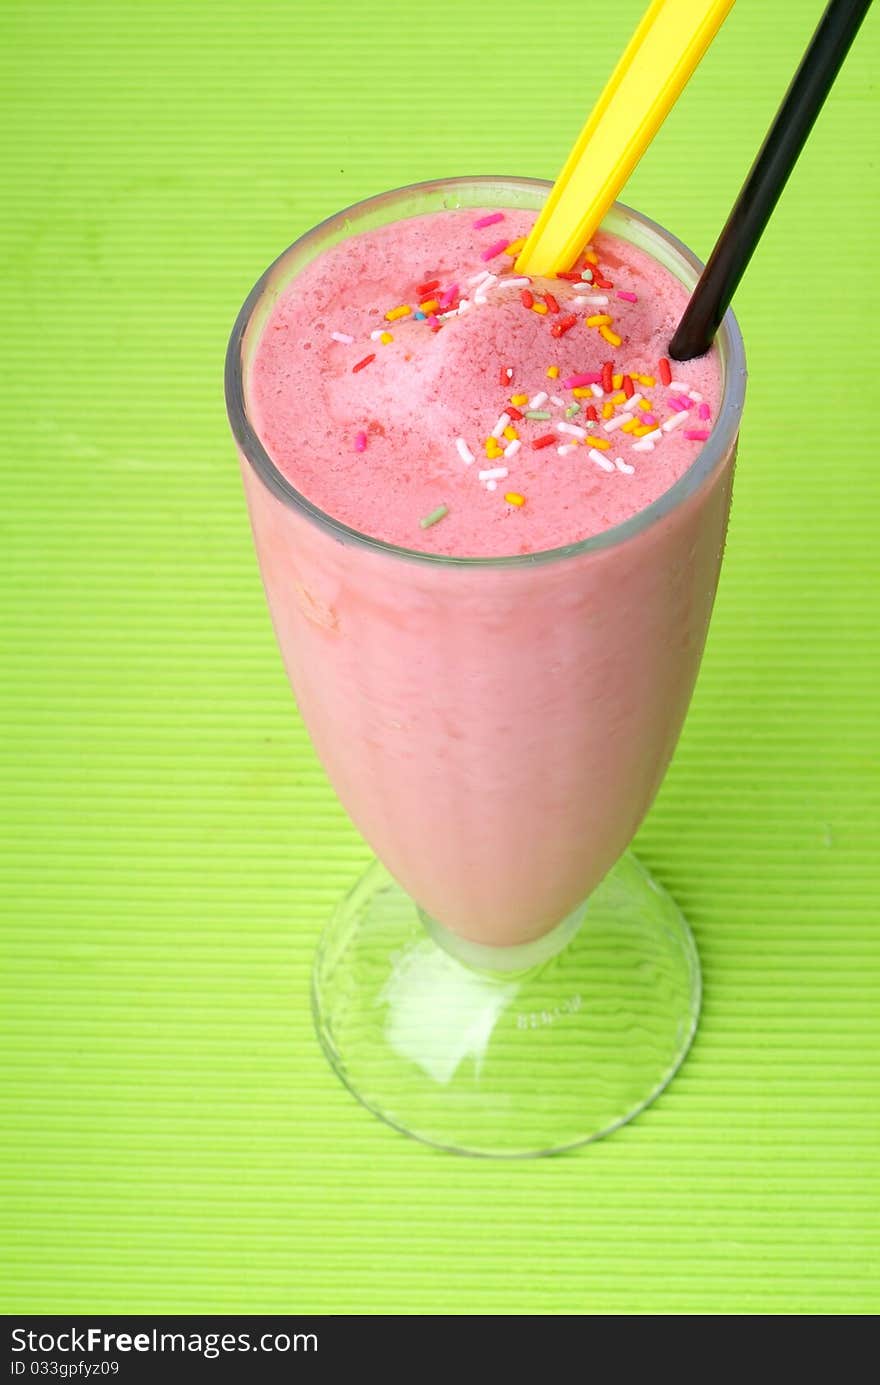 Strawberry milk shake with strawberry